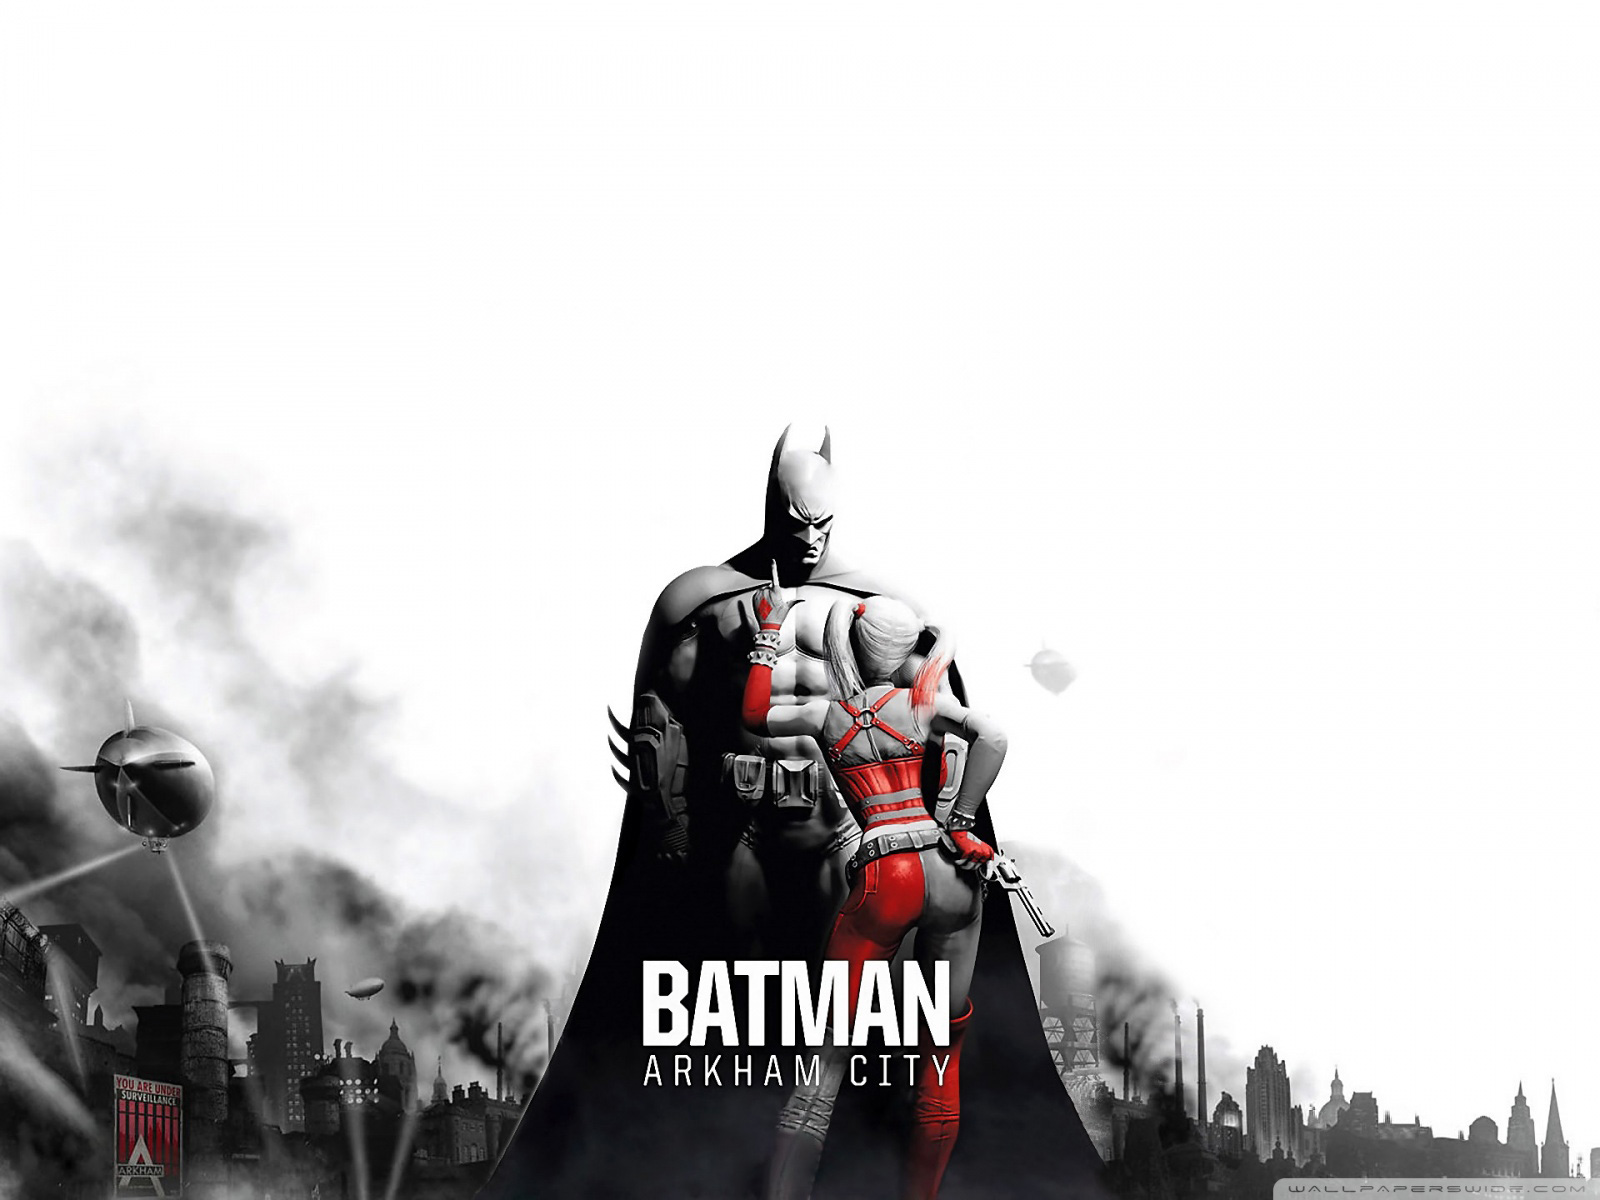 Batman: Arkham City Wallpaper Pack - Freeware - EN - download.chip.eu™